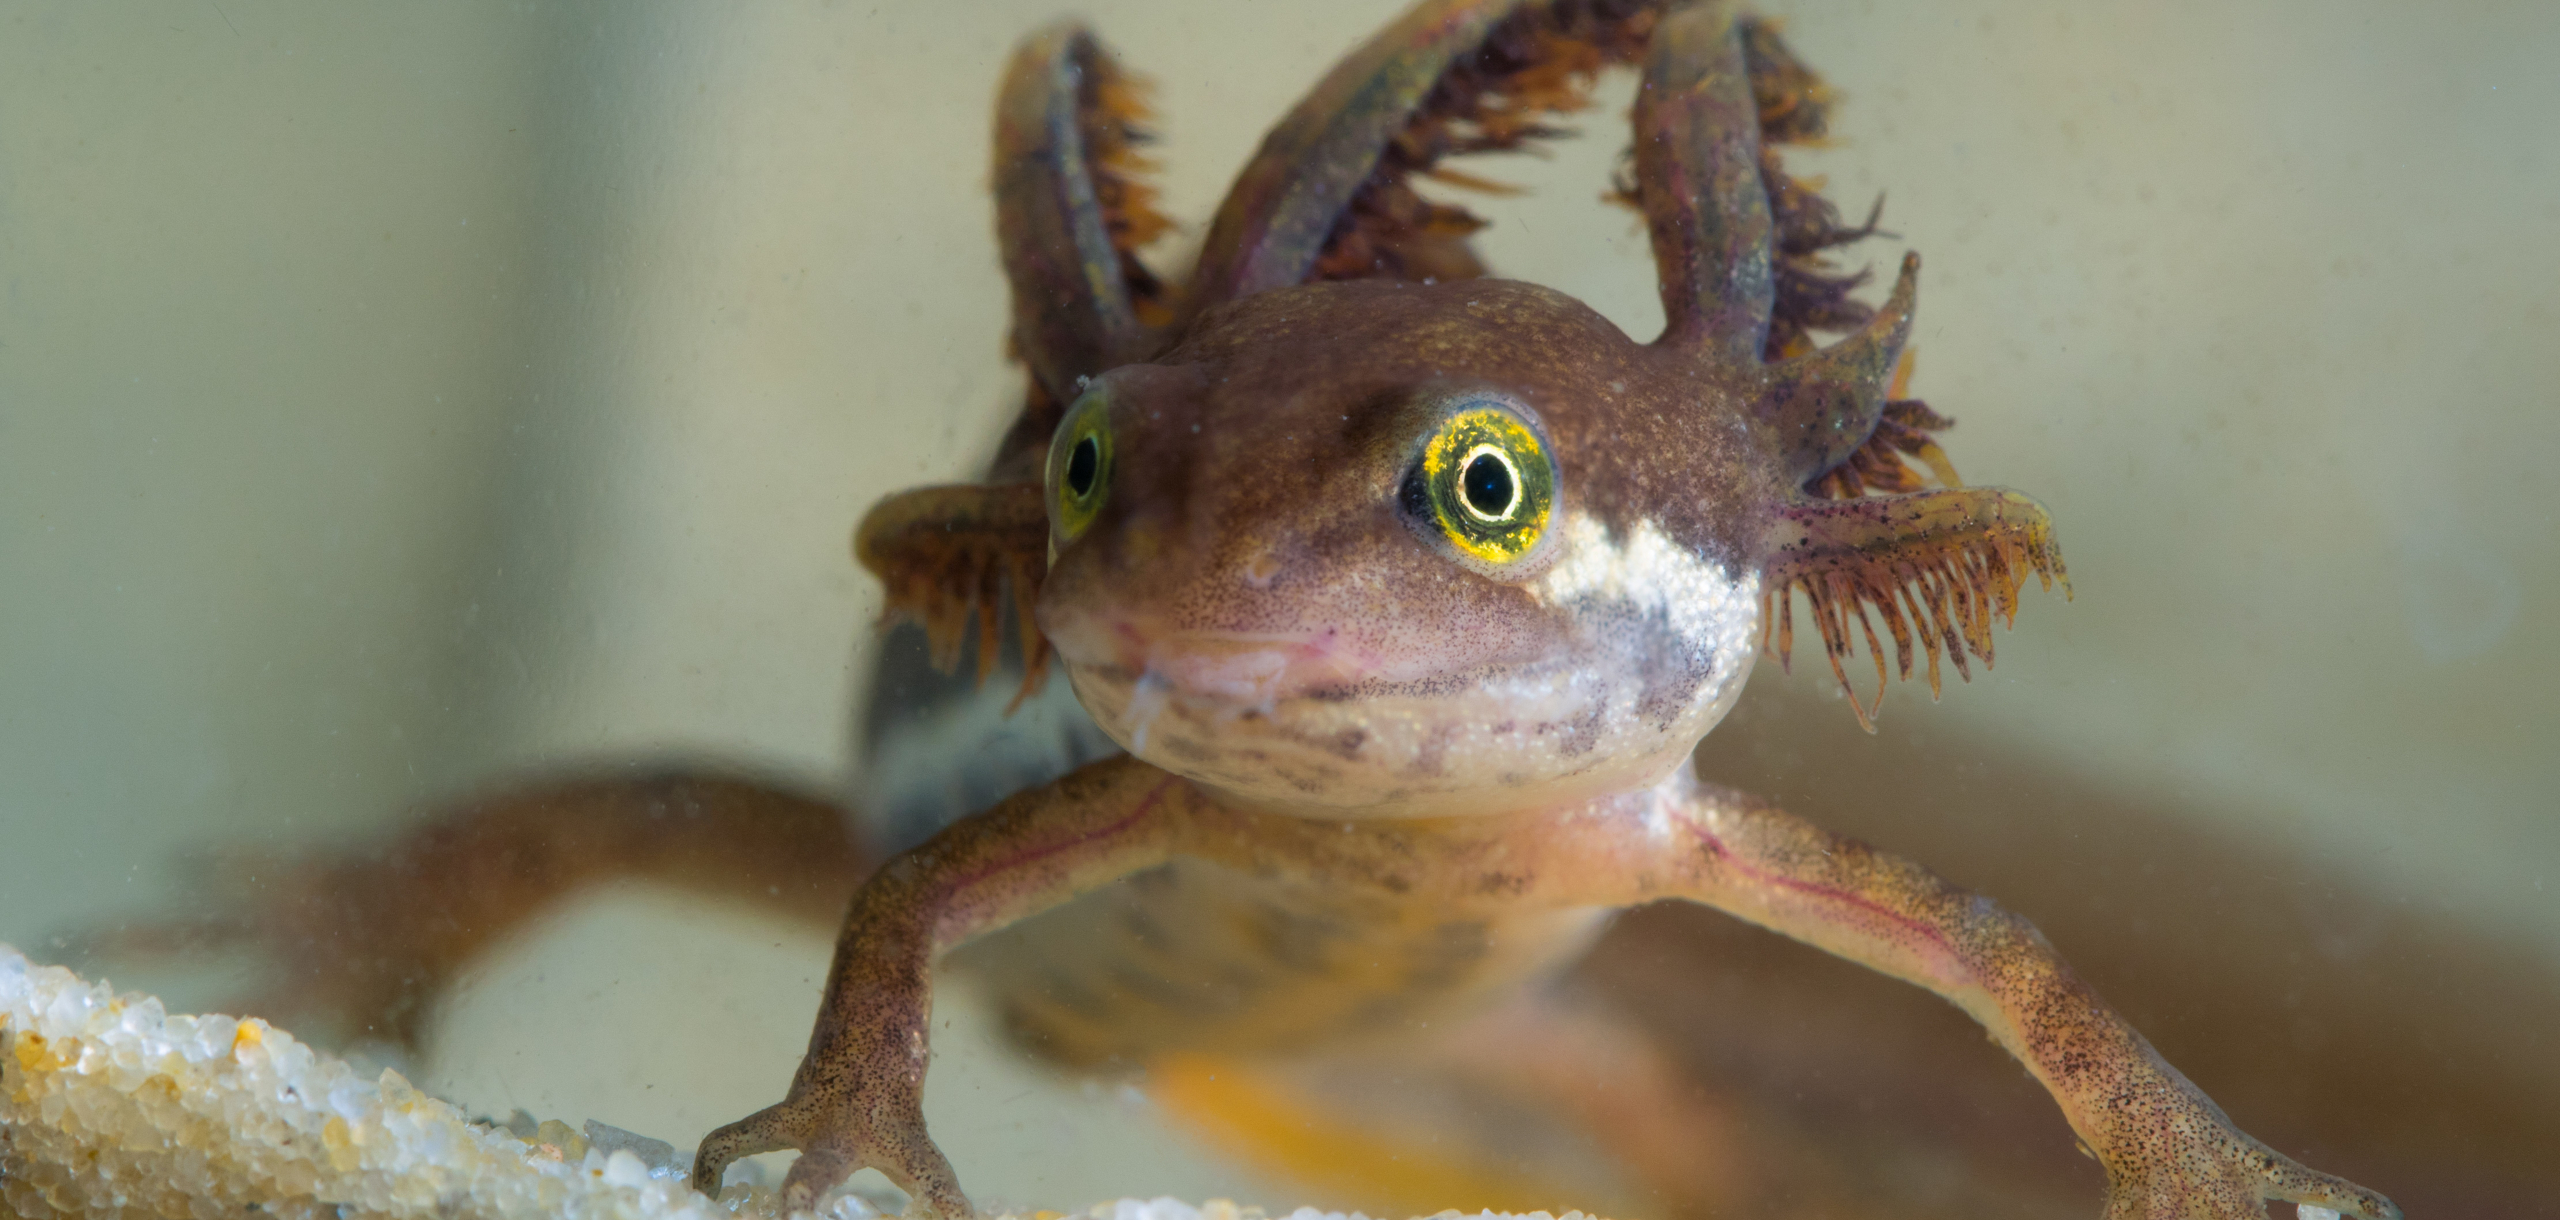 Neoteny also occurs in the Central European pond newt (Lissotriton vulgaris). | Geza Farkas/Shutterstock